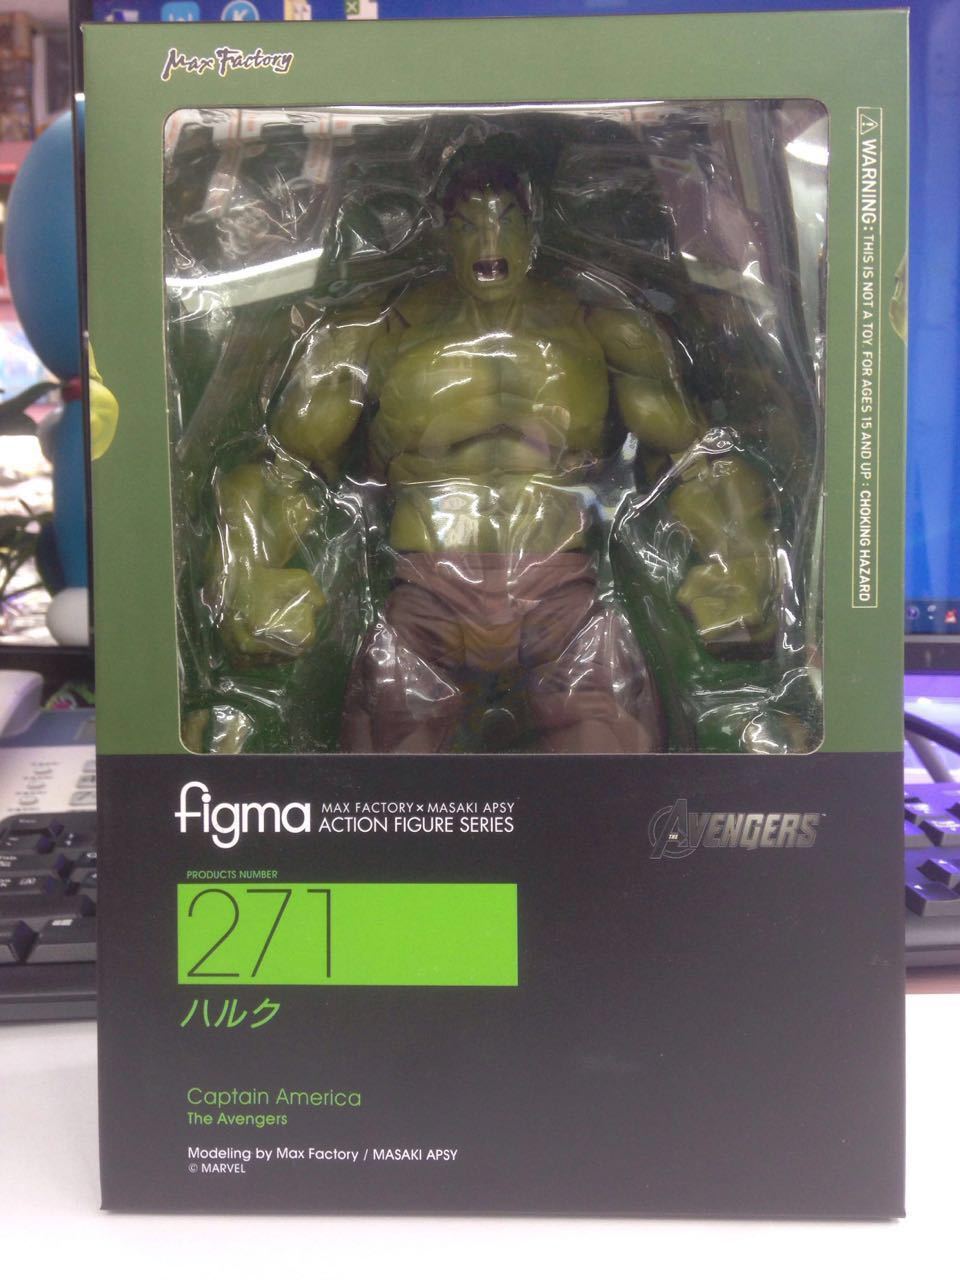 New The Avengers Captain America Hulk Figma 271 Action Figure Box Set Gift